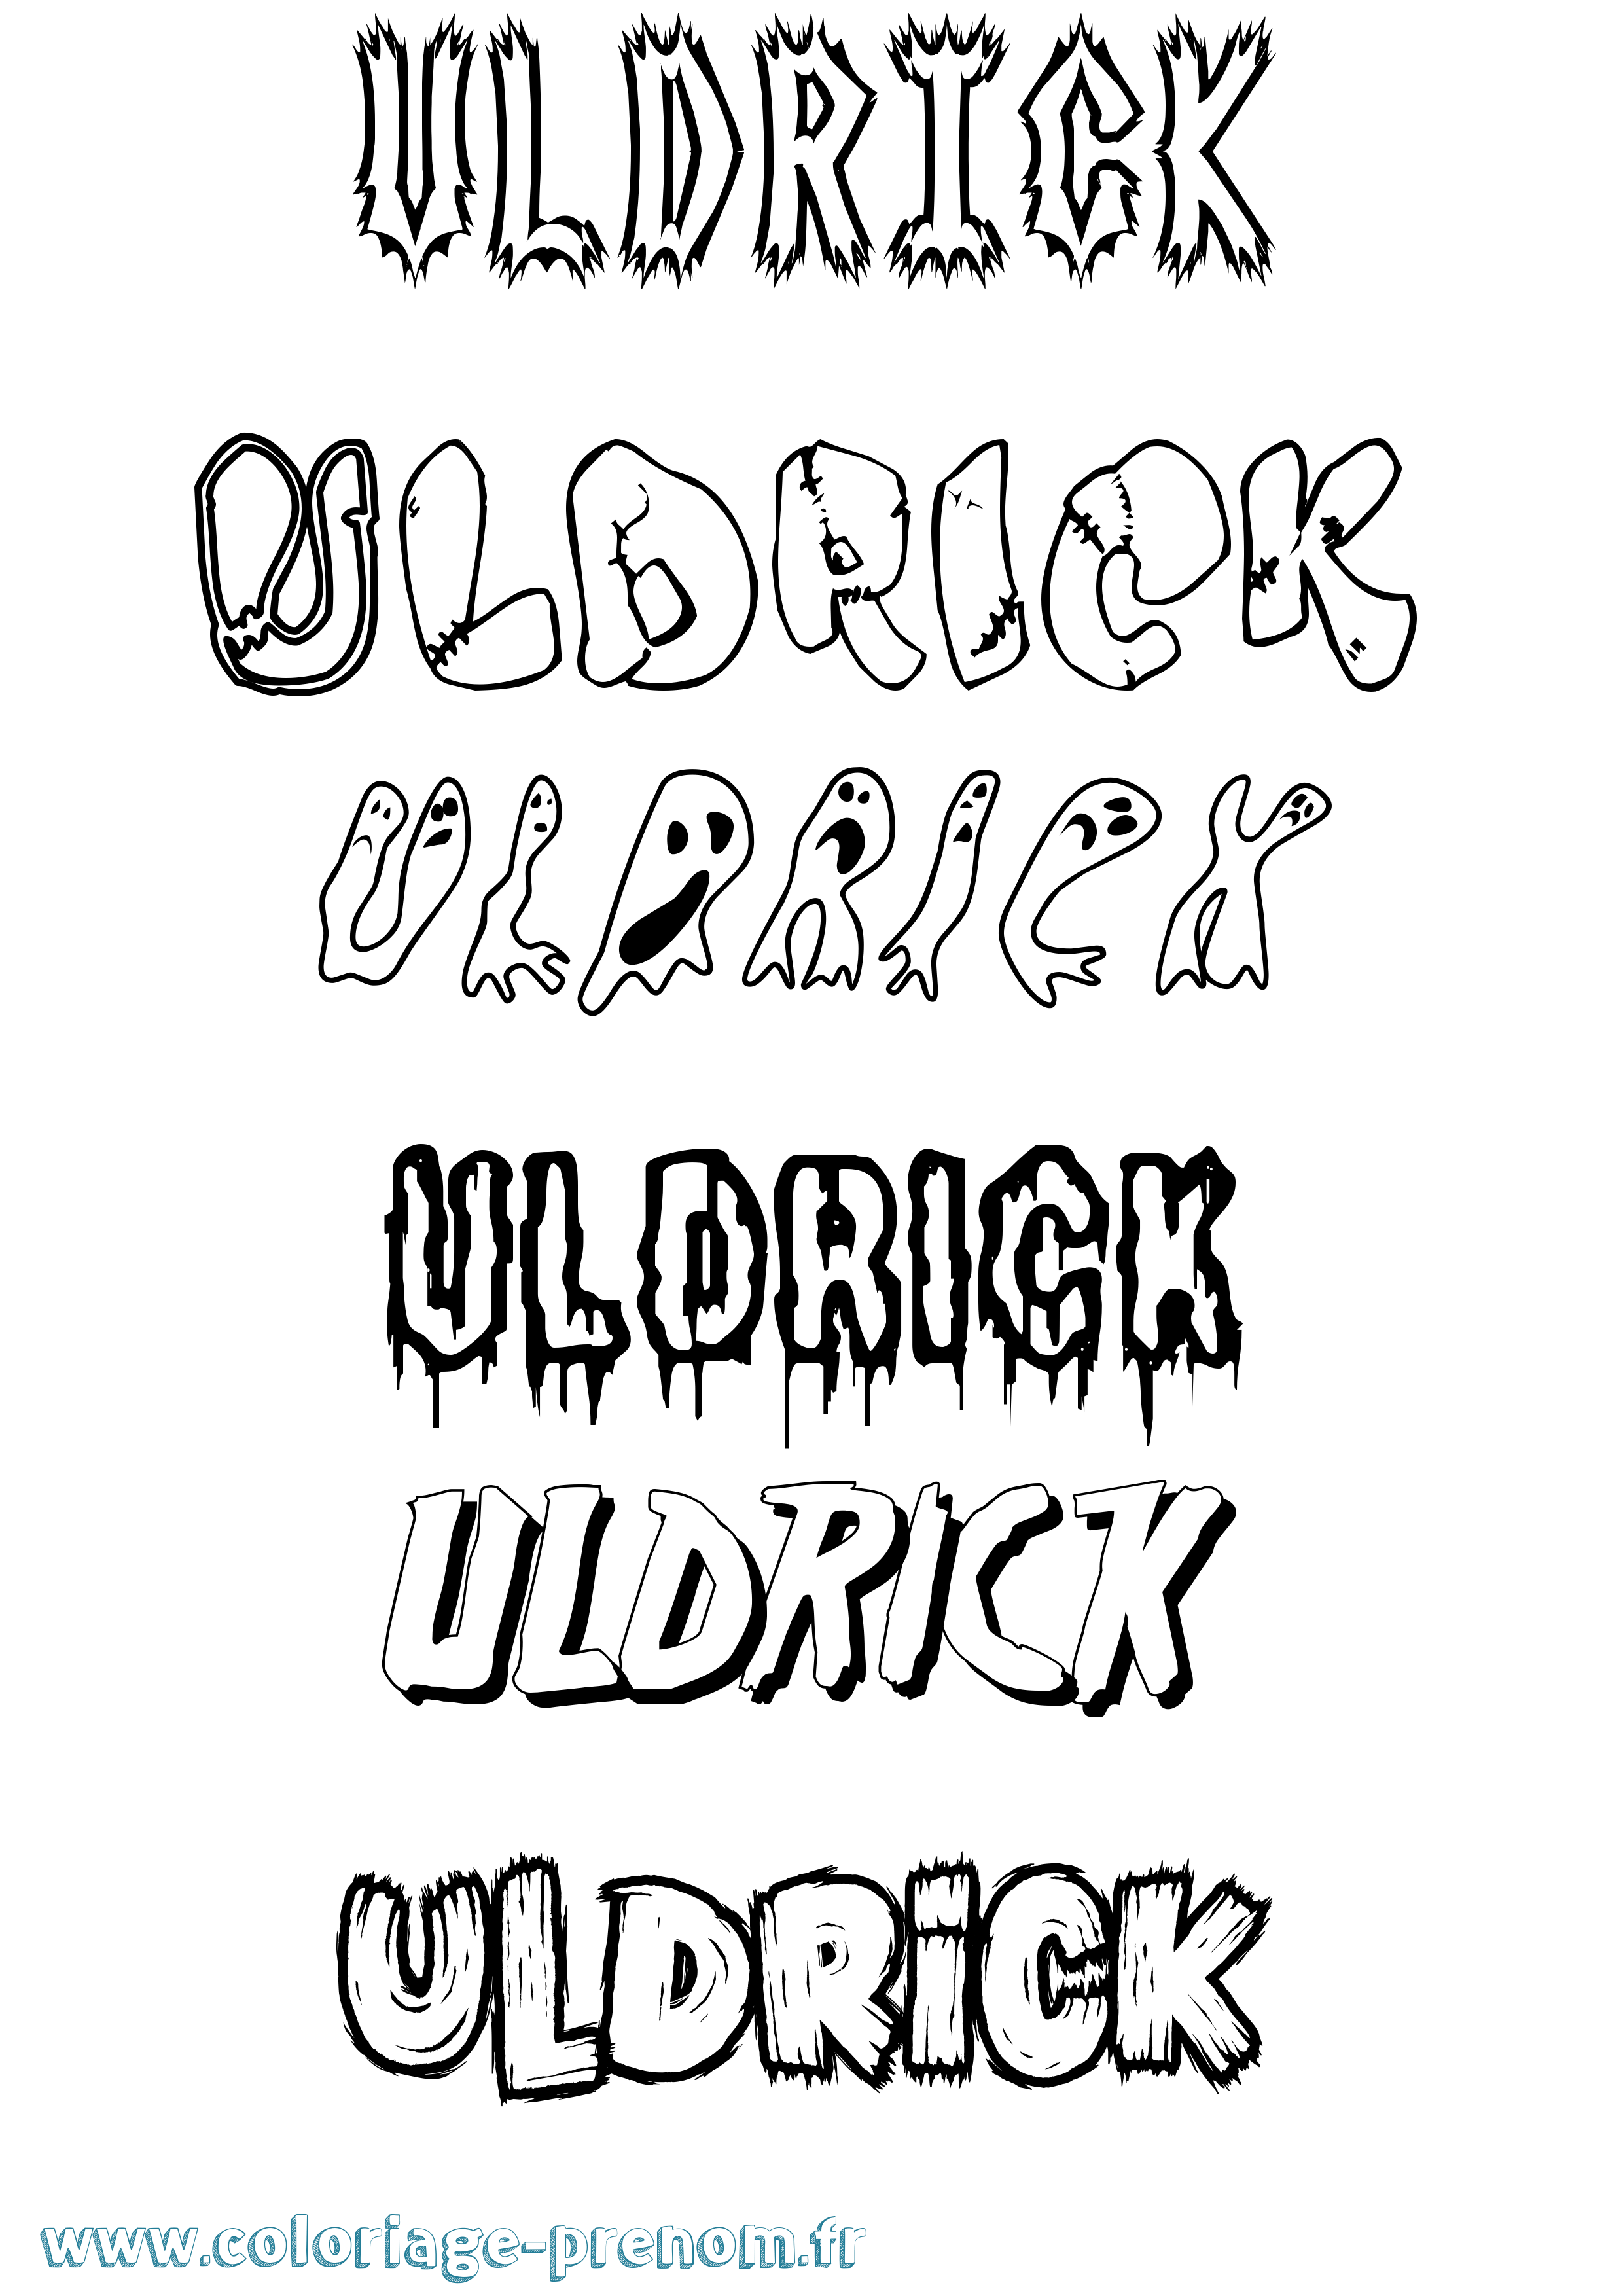 Coloriage prénom Uldrick Frisson